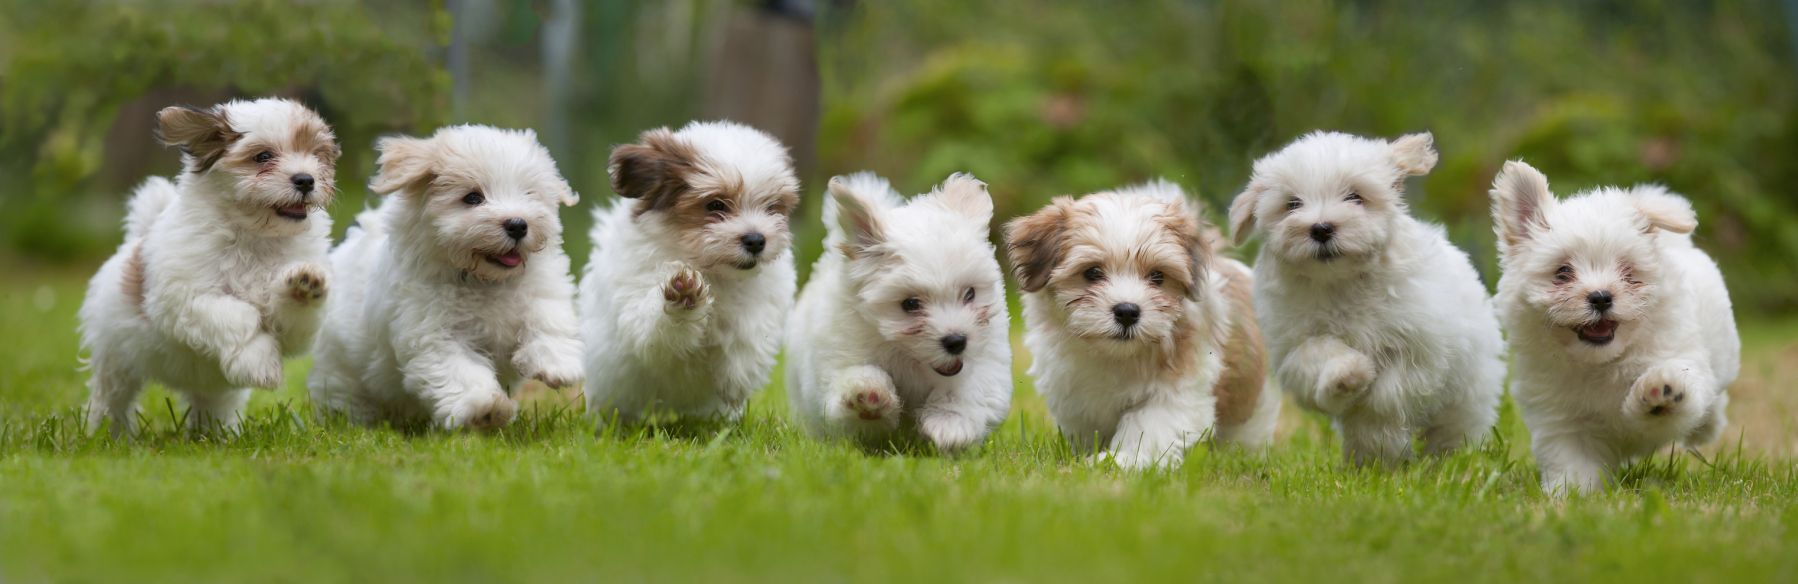 cute tiny dogs